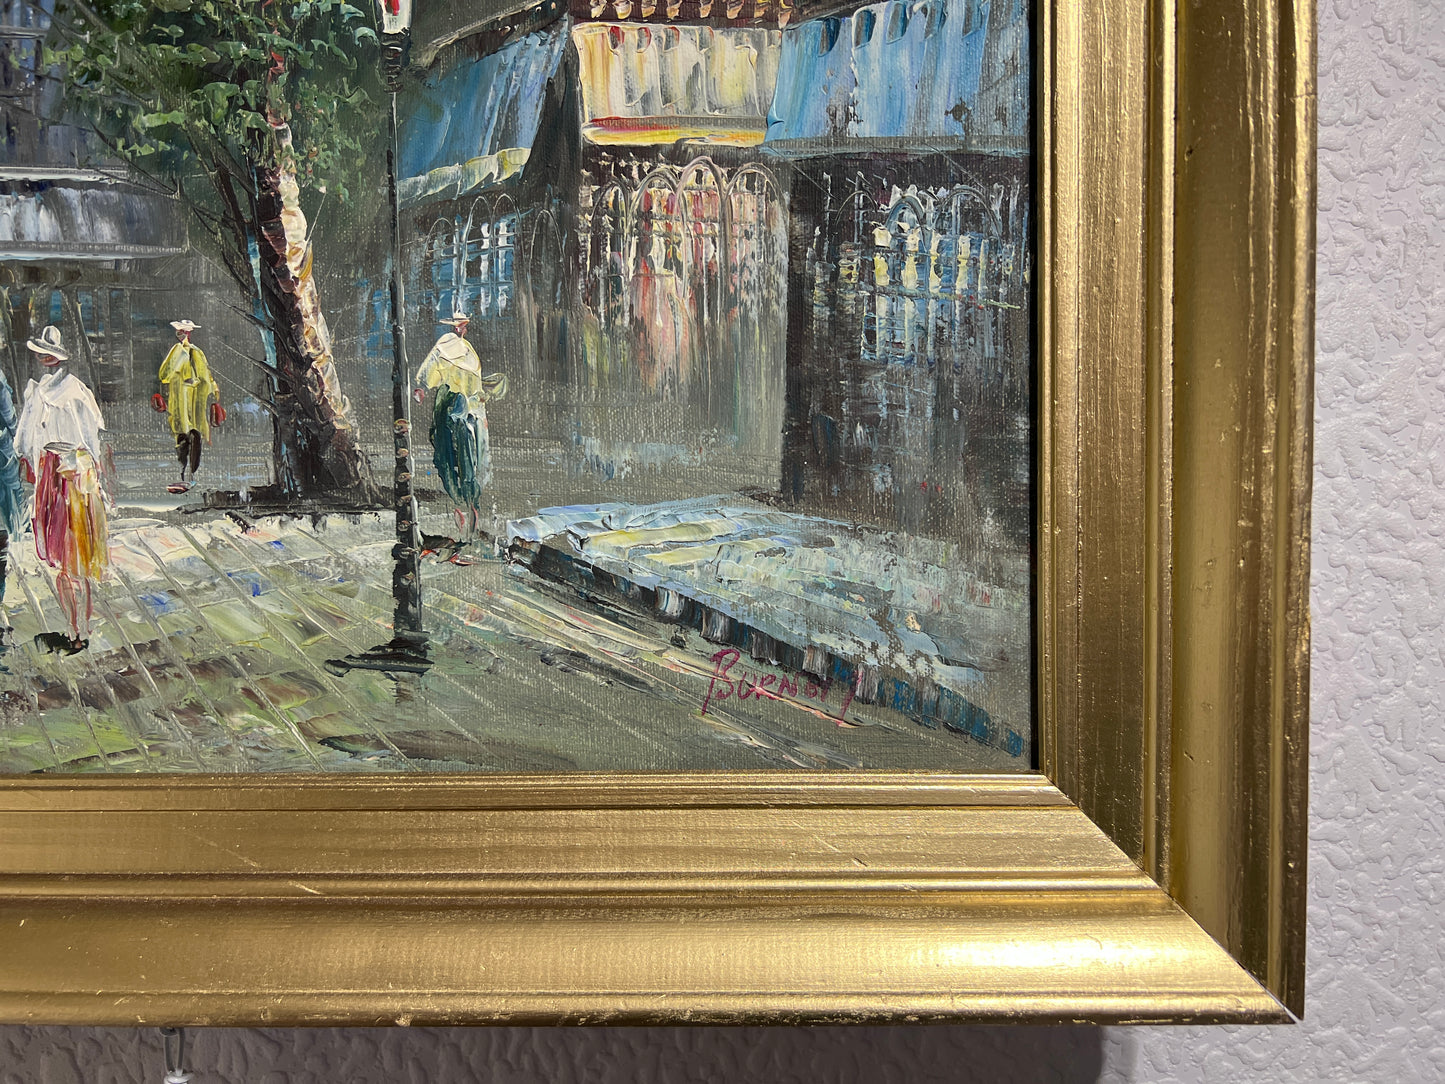 Listed Artist C.Burnett(IX-XX) oil painting on board Paris street view, framed